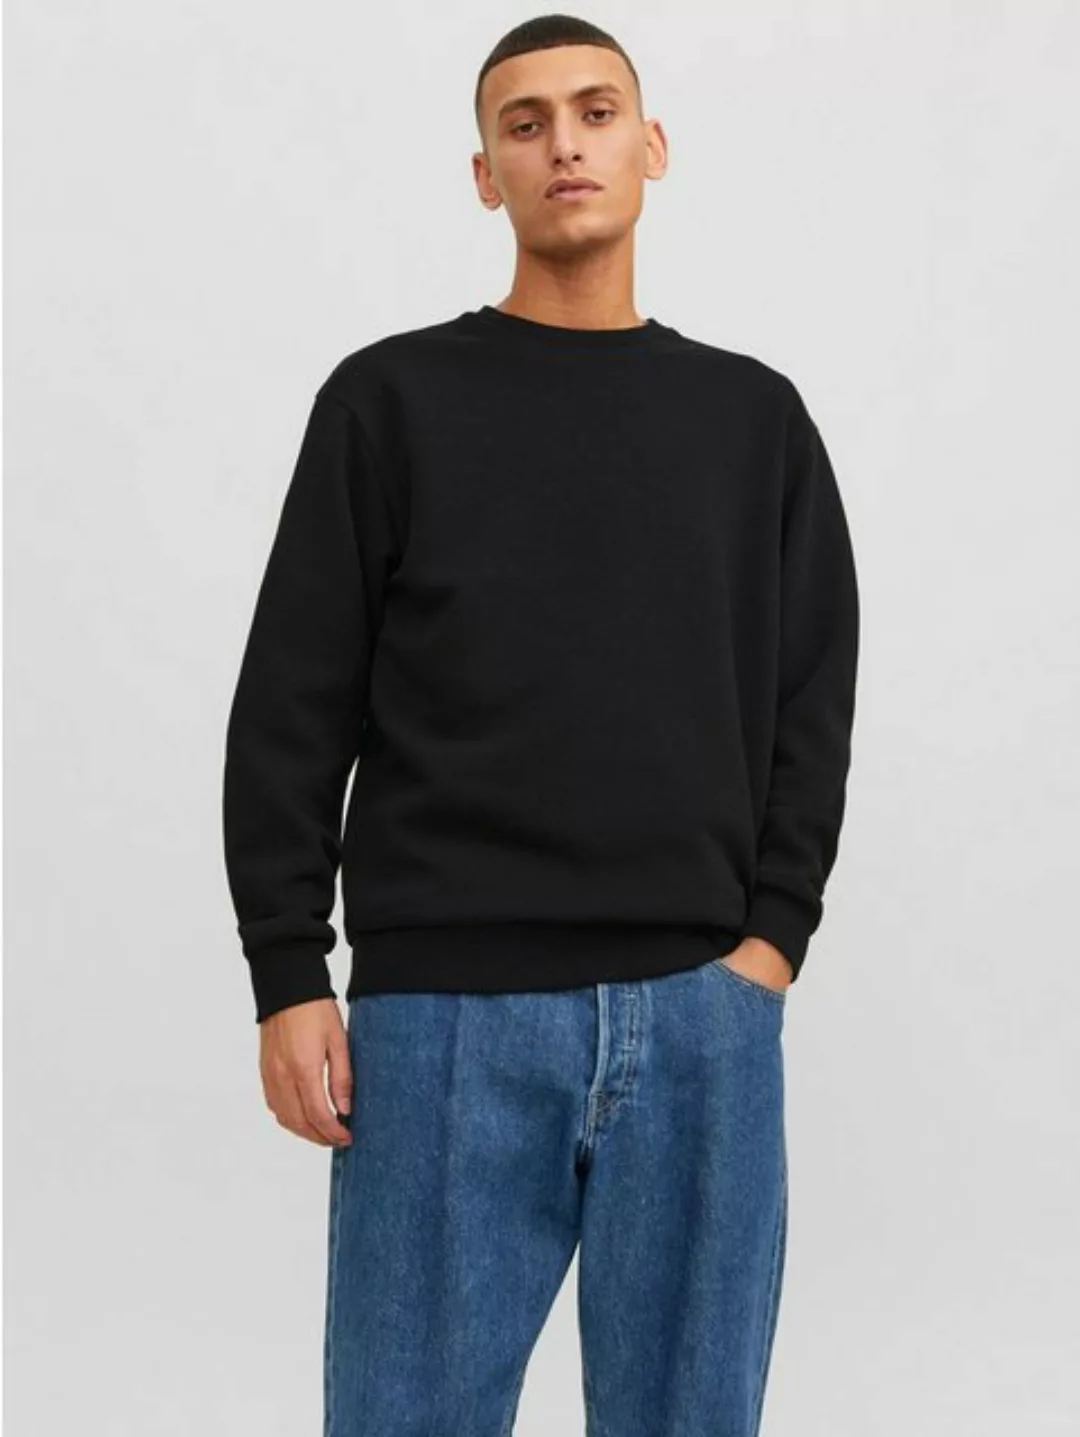 Jack & Jones Sweatshirt Basic Sweater Sweatshirt Pullover JJEBRADLEY 6027 i günstig online kaufen